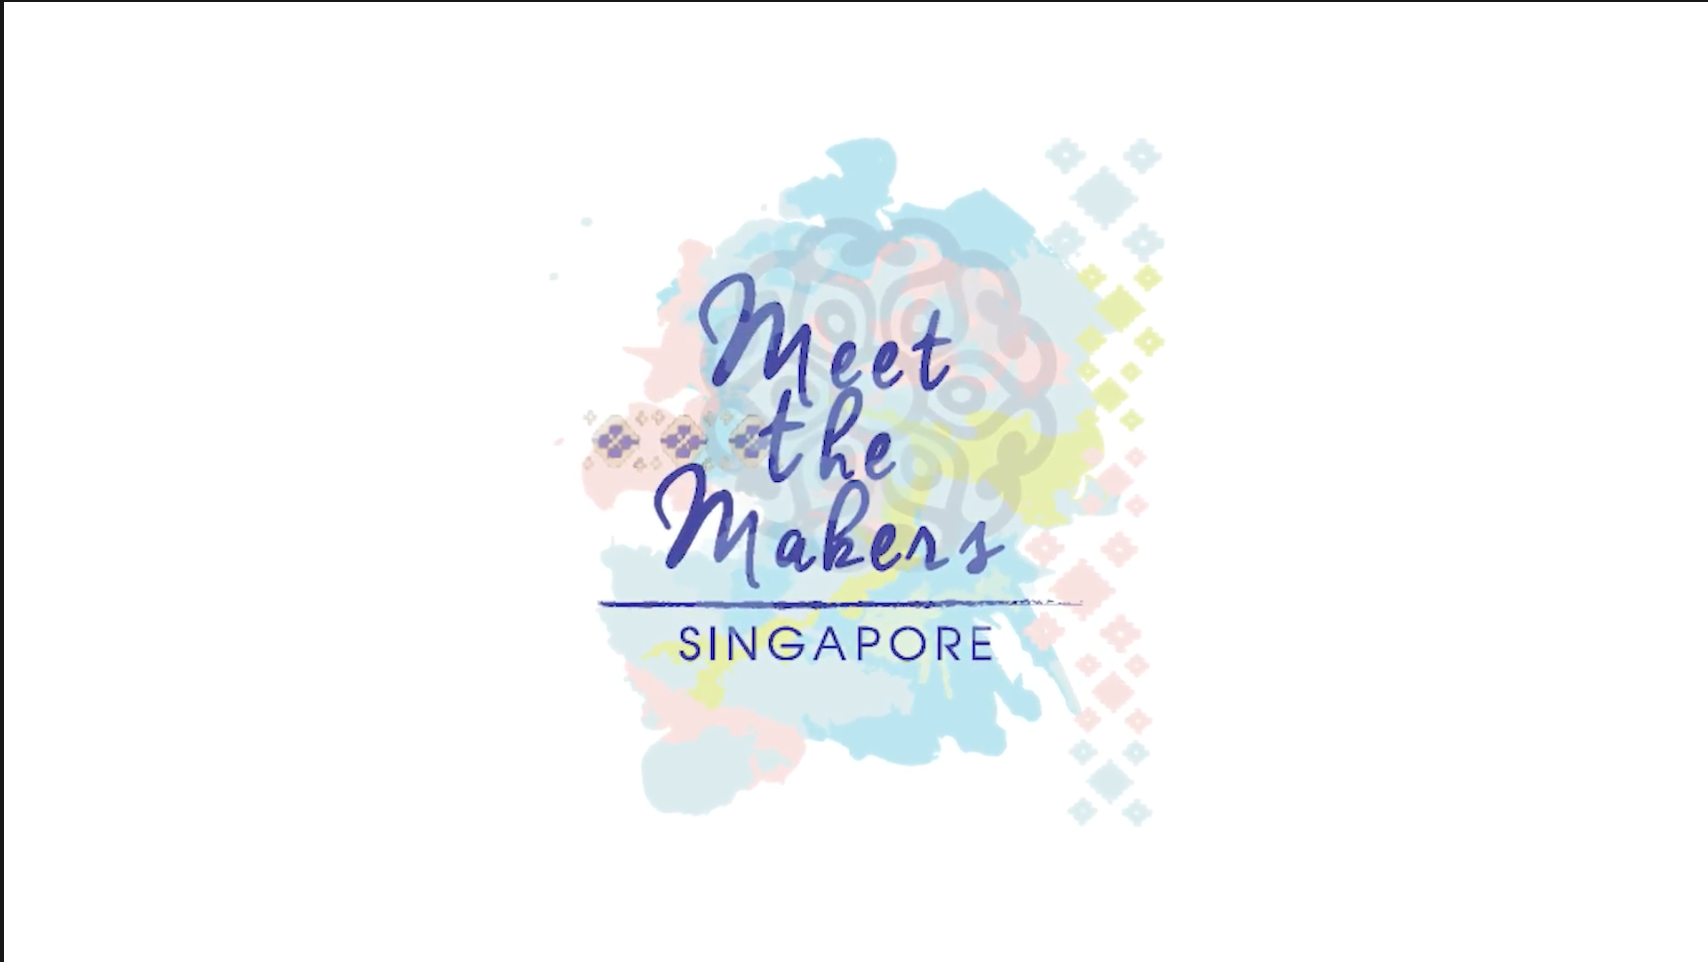 Brahma Tirta Sari | Meet The Makers Singapore 2017